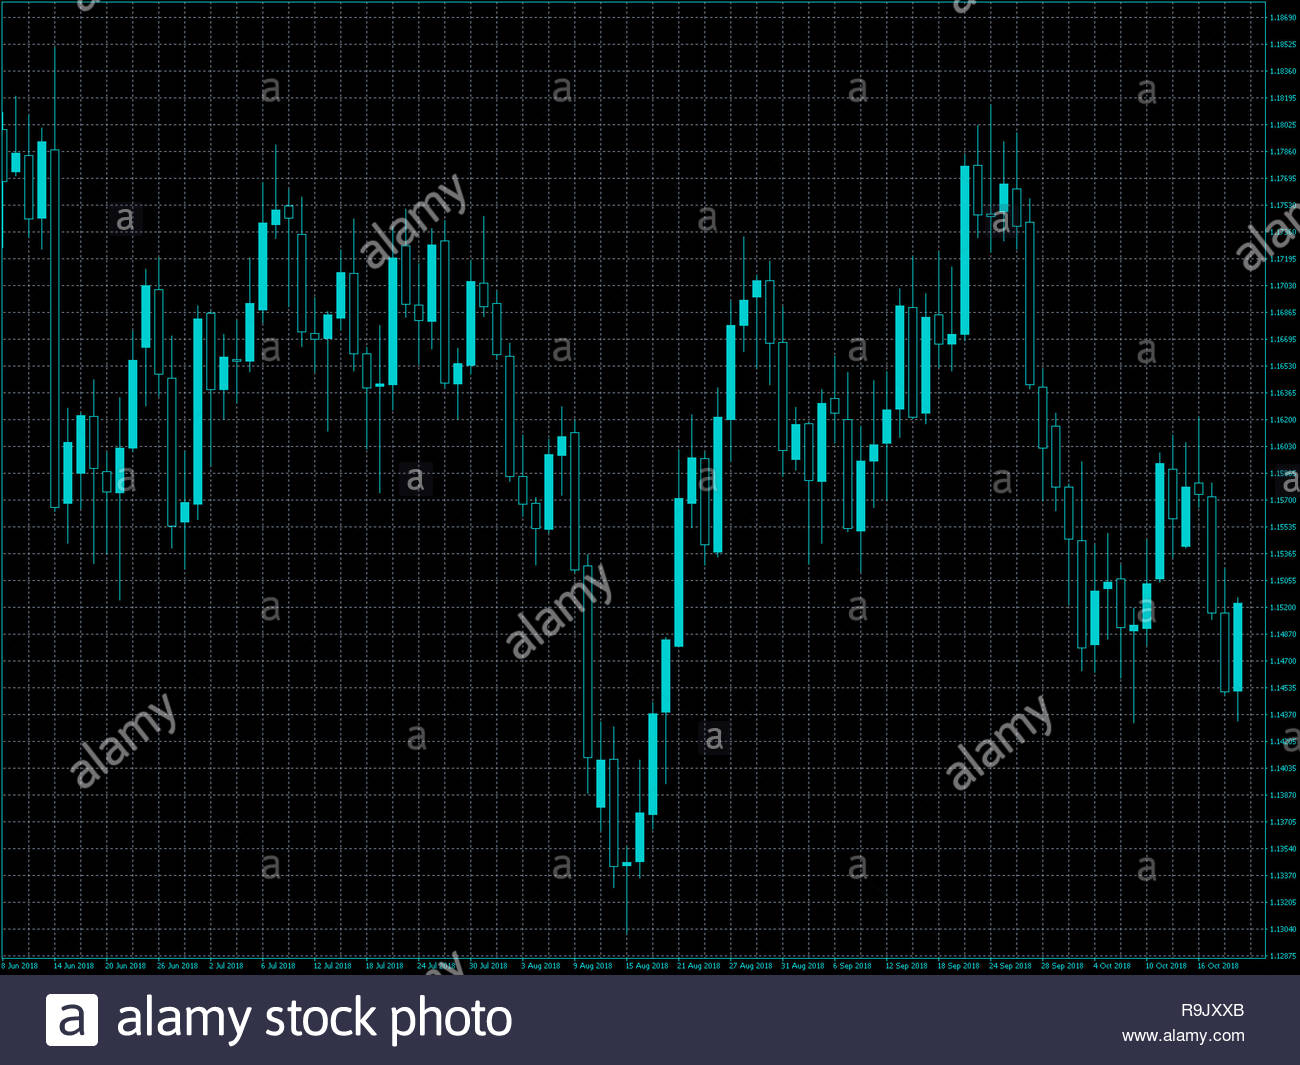 Trading Chart Wallpaper